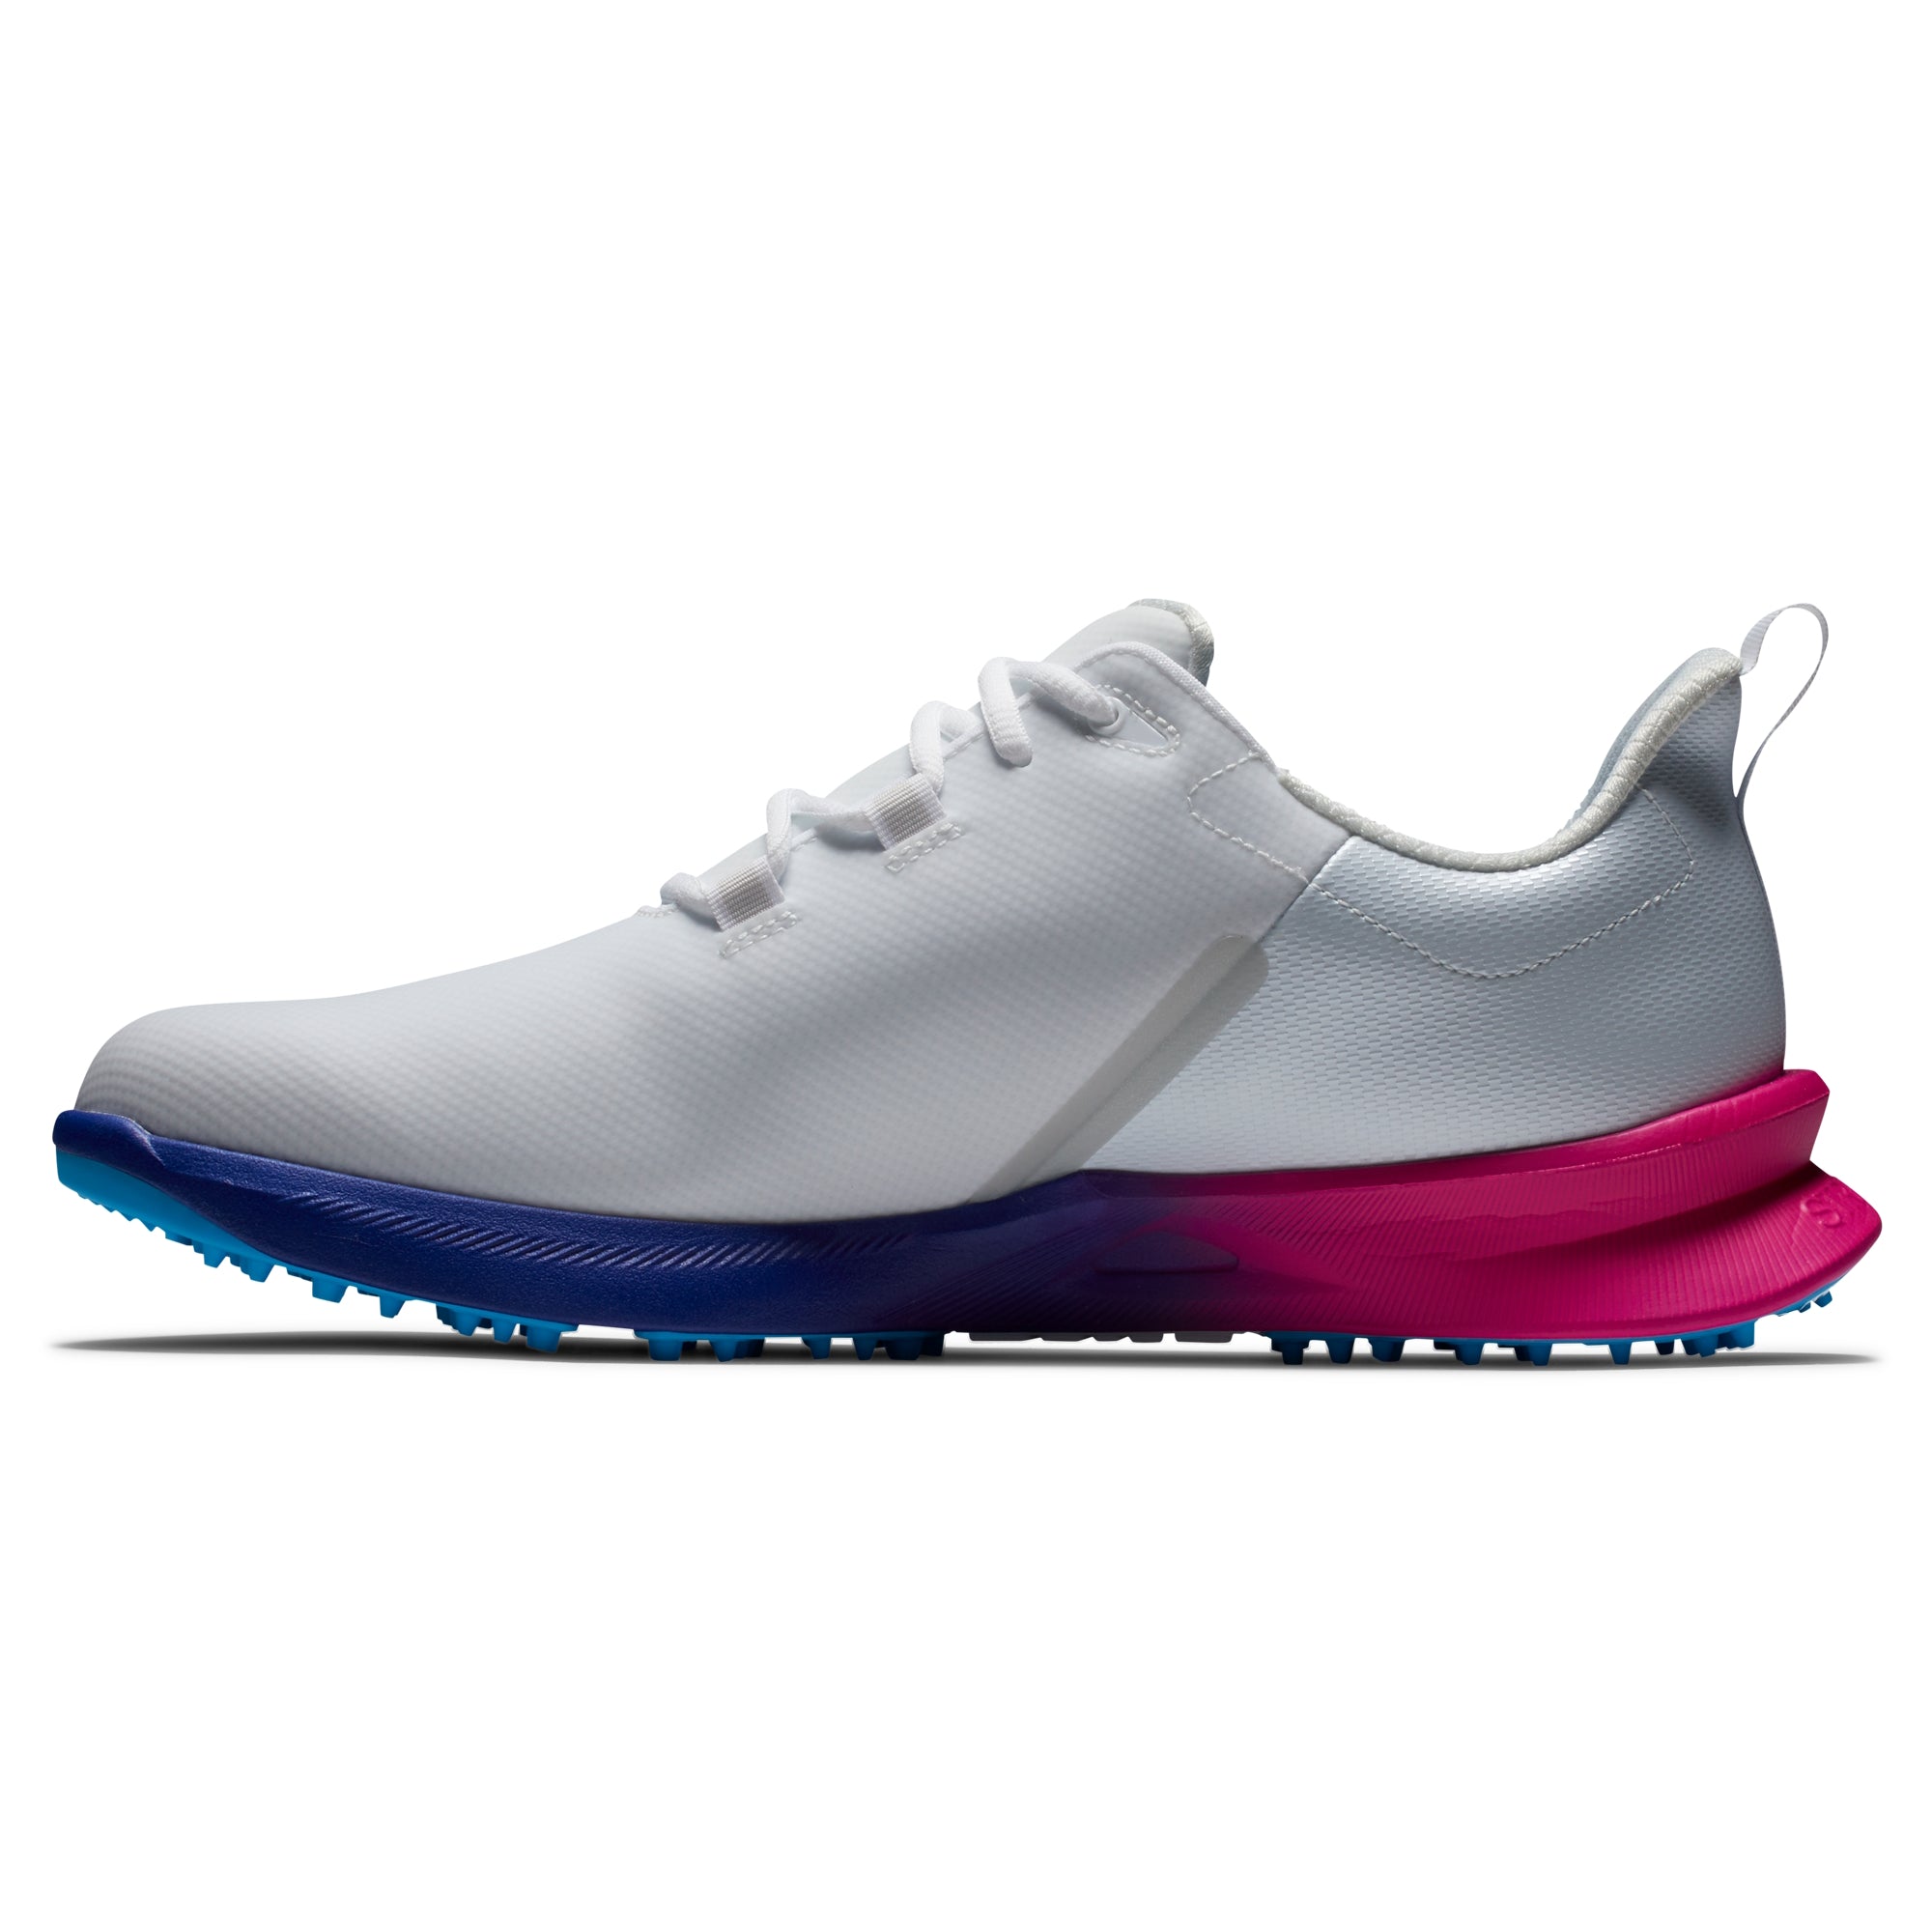 FootJoy Fuel Men's Golf Shoes - White/Pink/Blue | Golf Direct Now